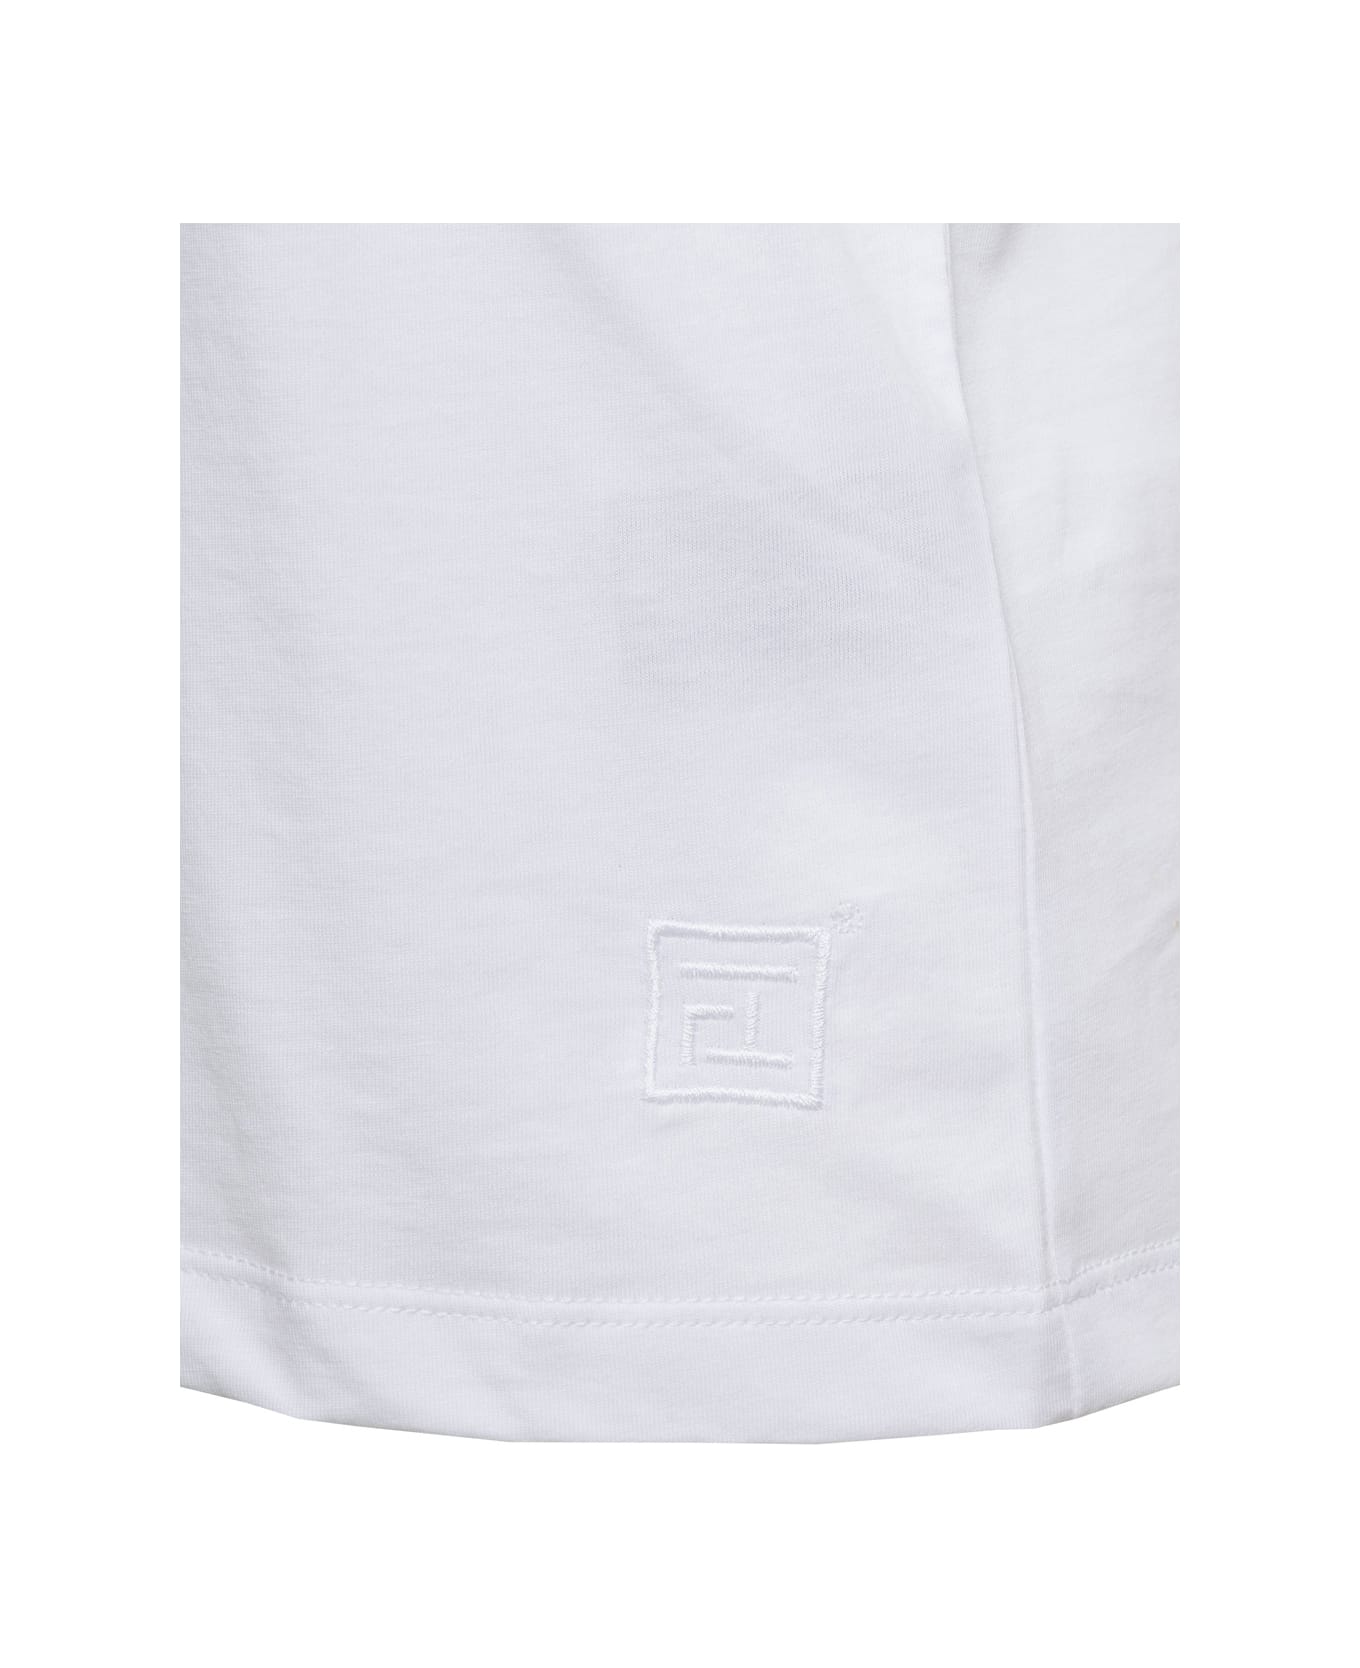 Federica Tosi White Crewneck T-shirt In Cotton Woman - White